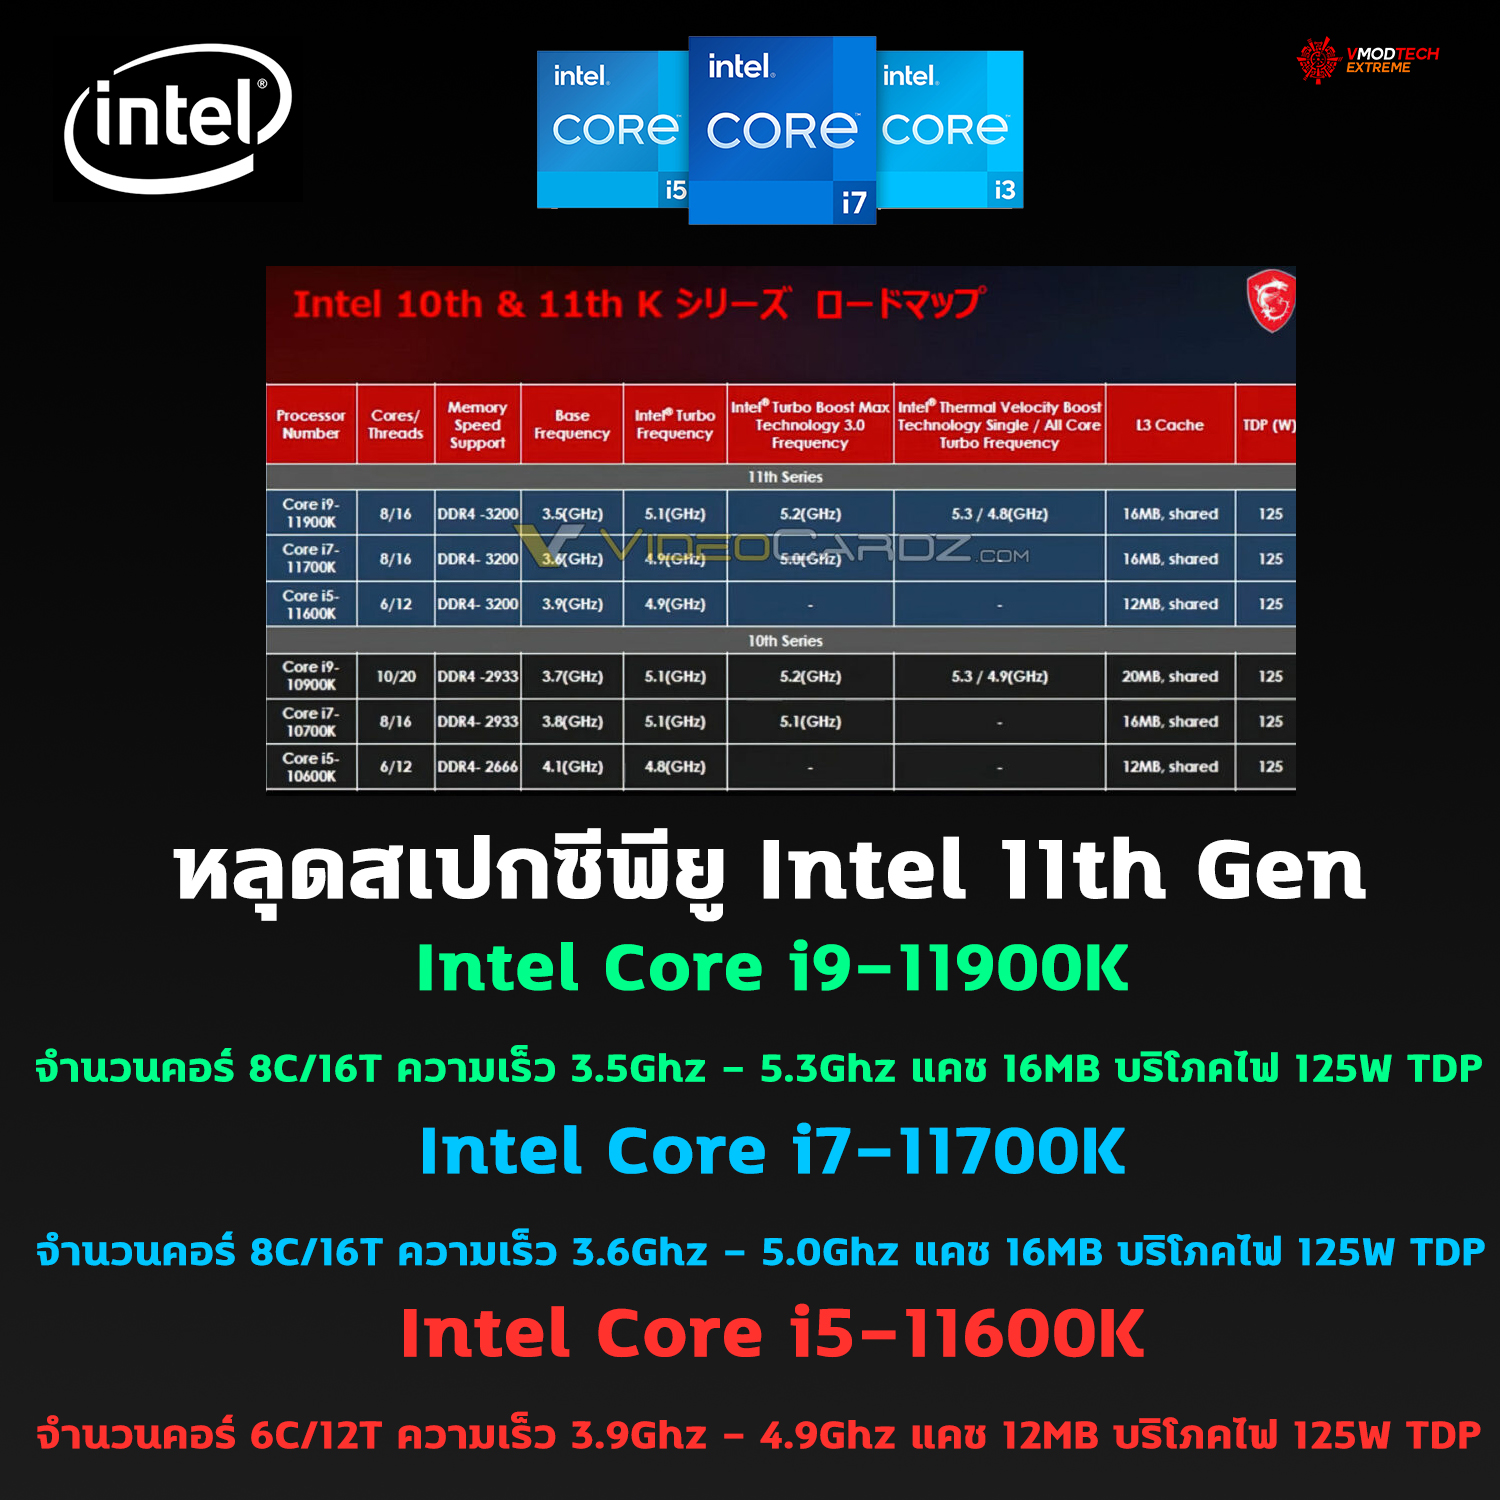 intel core i9 11900k core i7 11700k core i5 11600k spec หลุดสเปกซีพียู Intel Core i9 11900K, Core i7 11700K และ Core i5 11600K ในรหัส Rocket Lake อย่างไม่เป็นทางการ